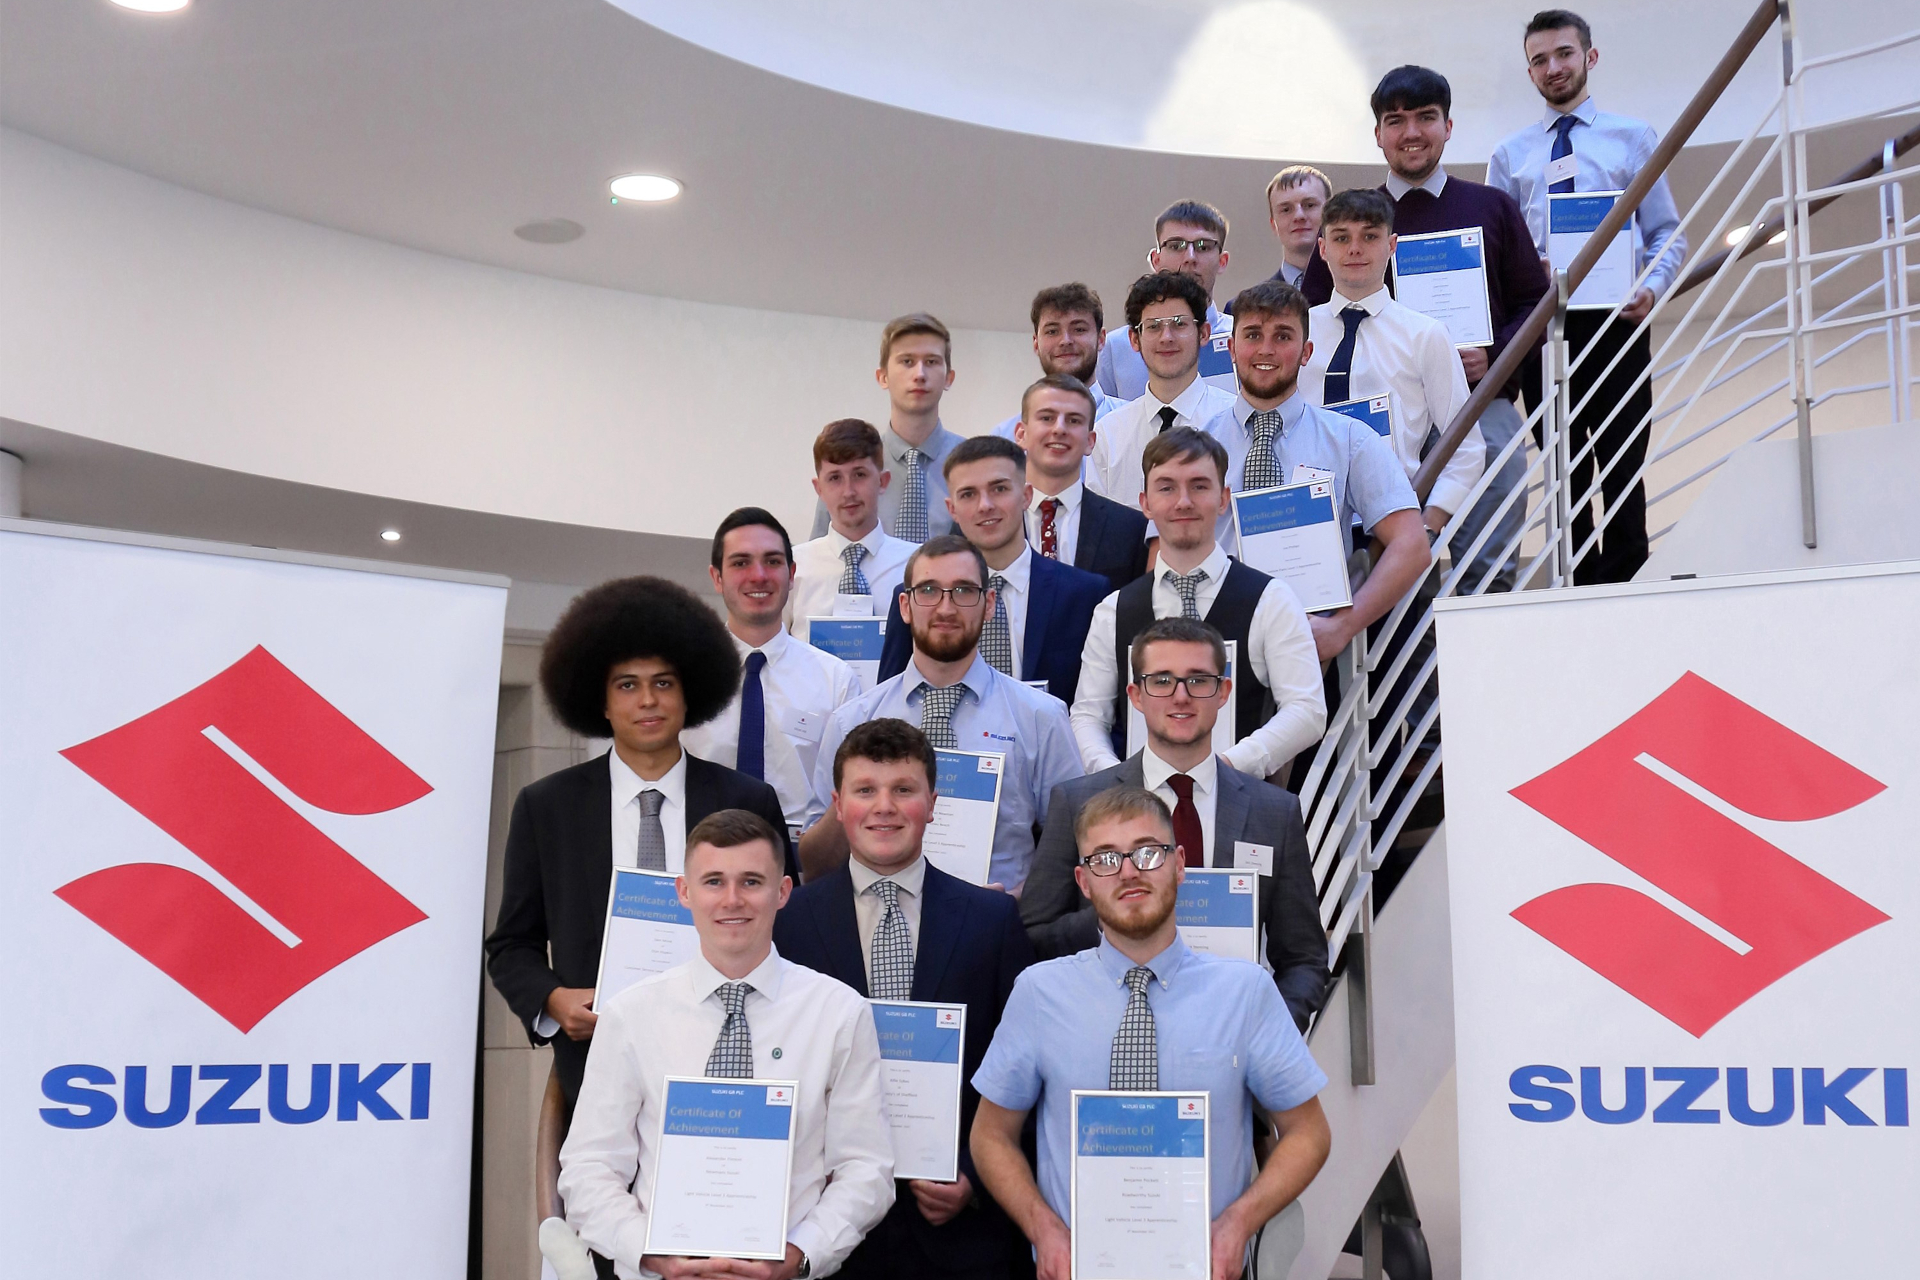 Suzuki apprenticeship programme: Celebrating latest graduates